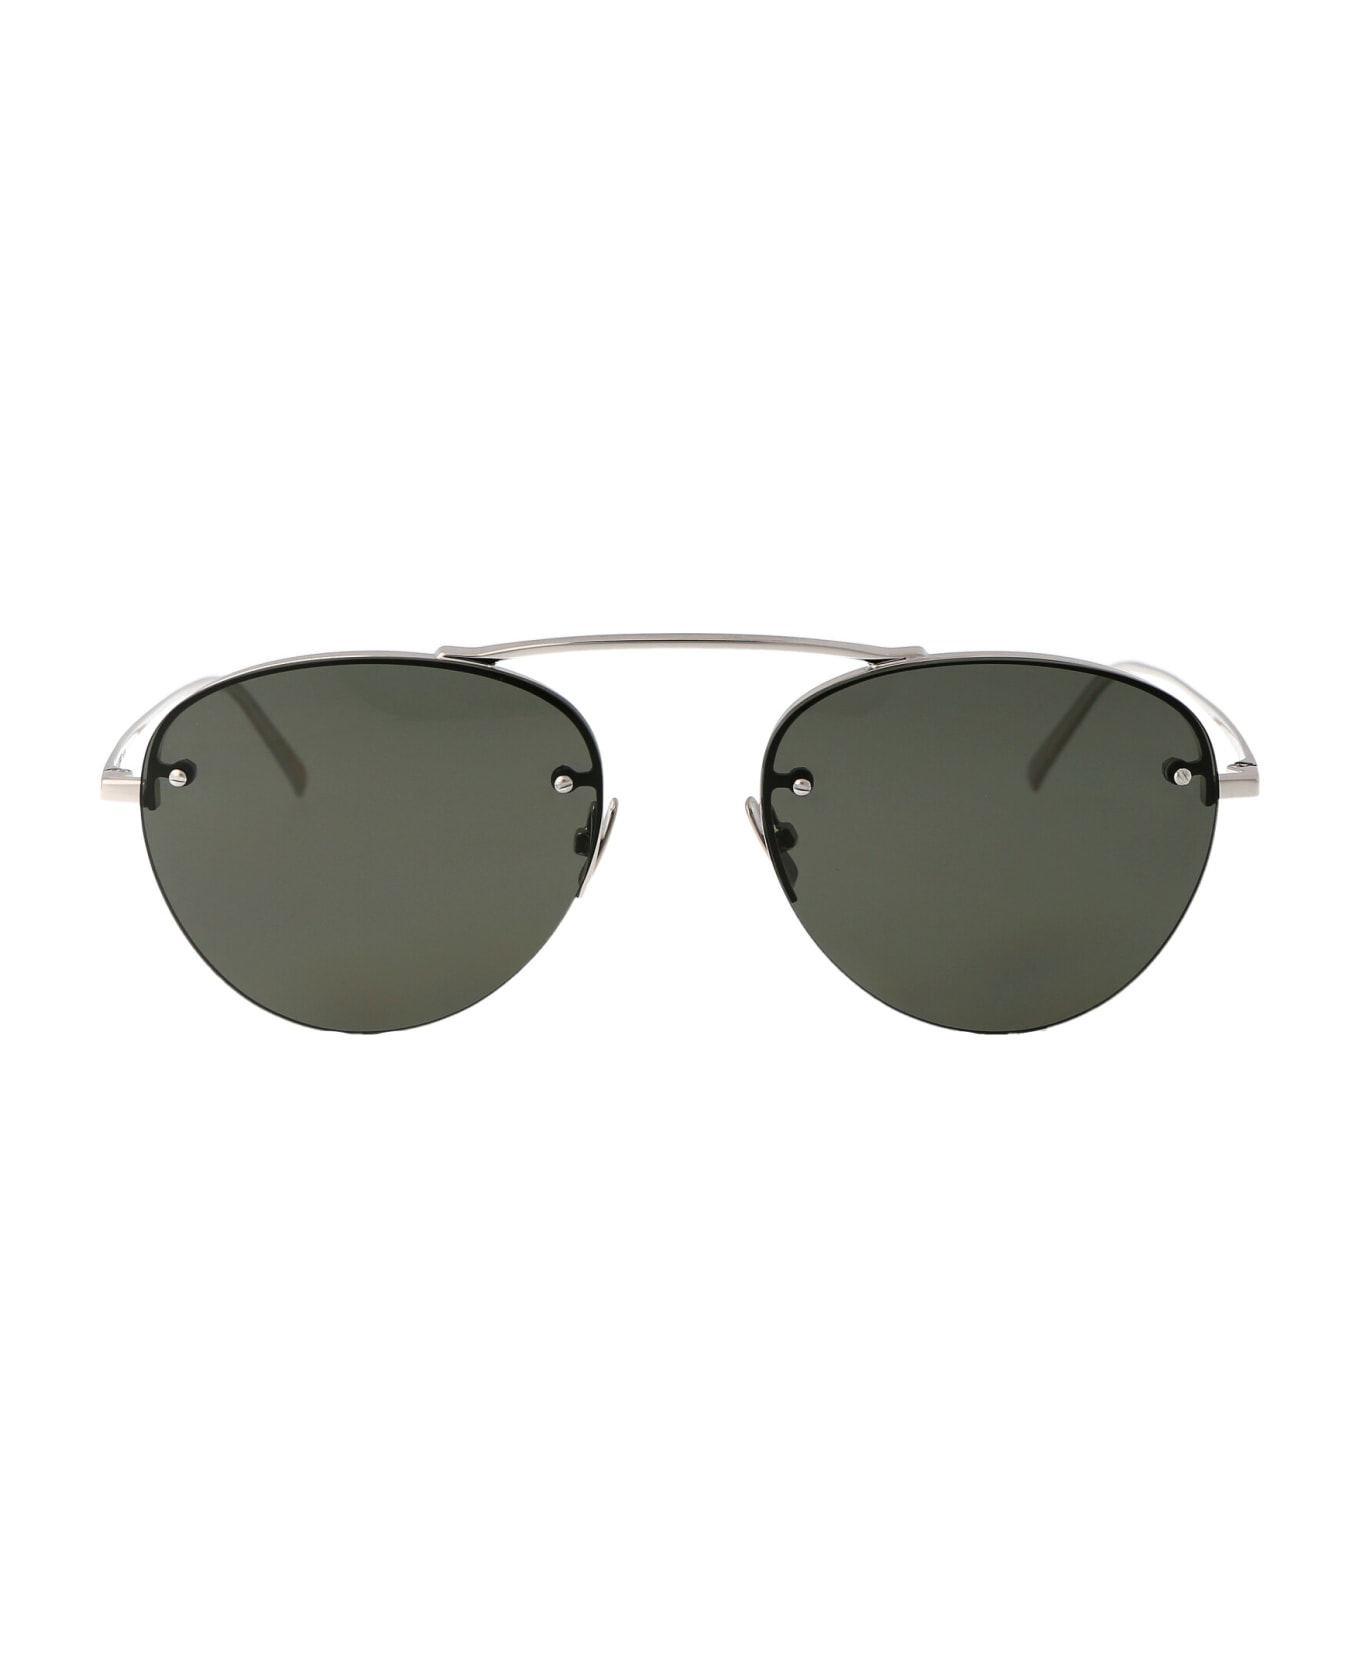 Saint Laurent Eyewear Sl 575 Sunglasses - 002 SILVER SILVER GREY